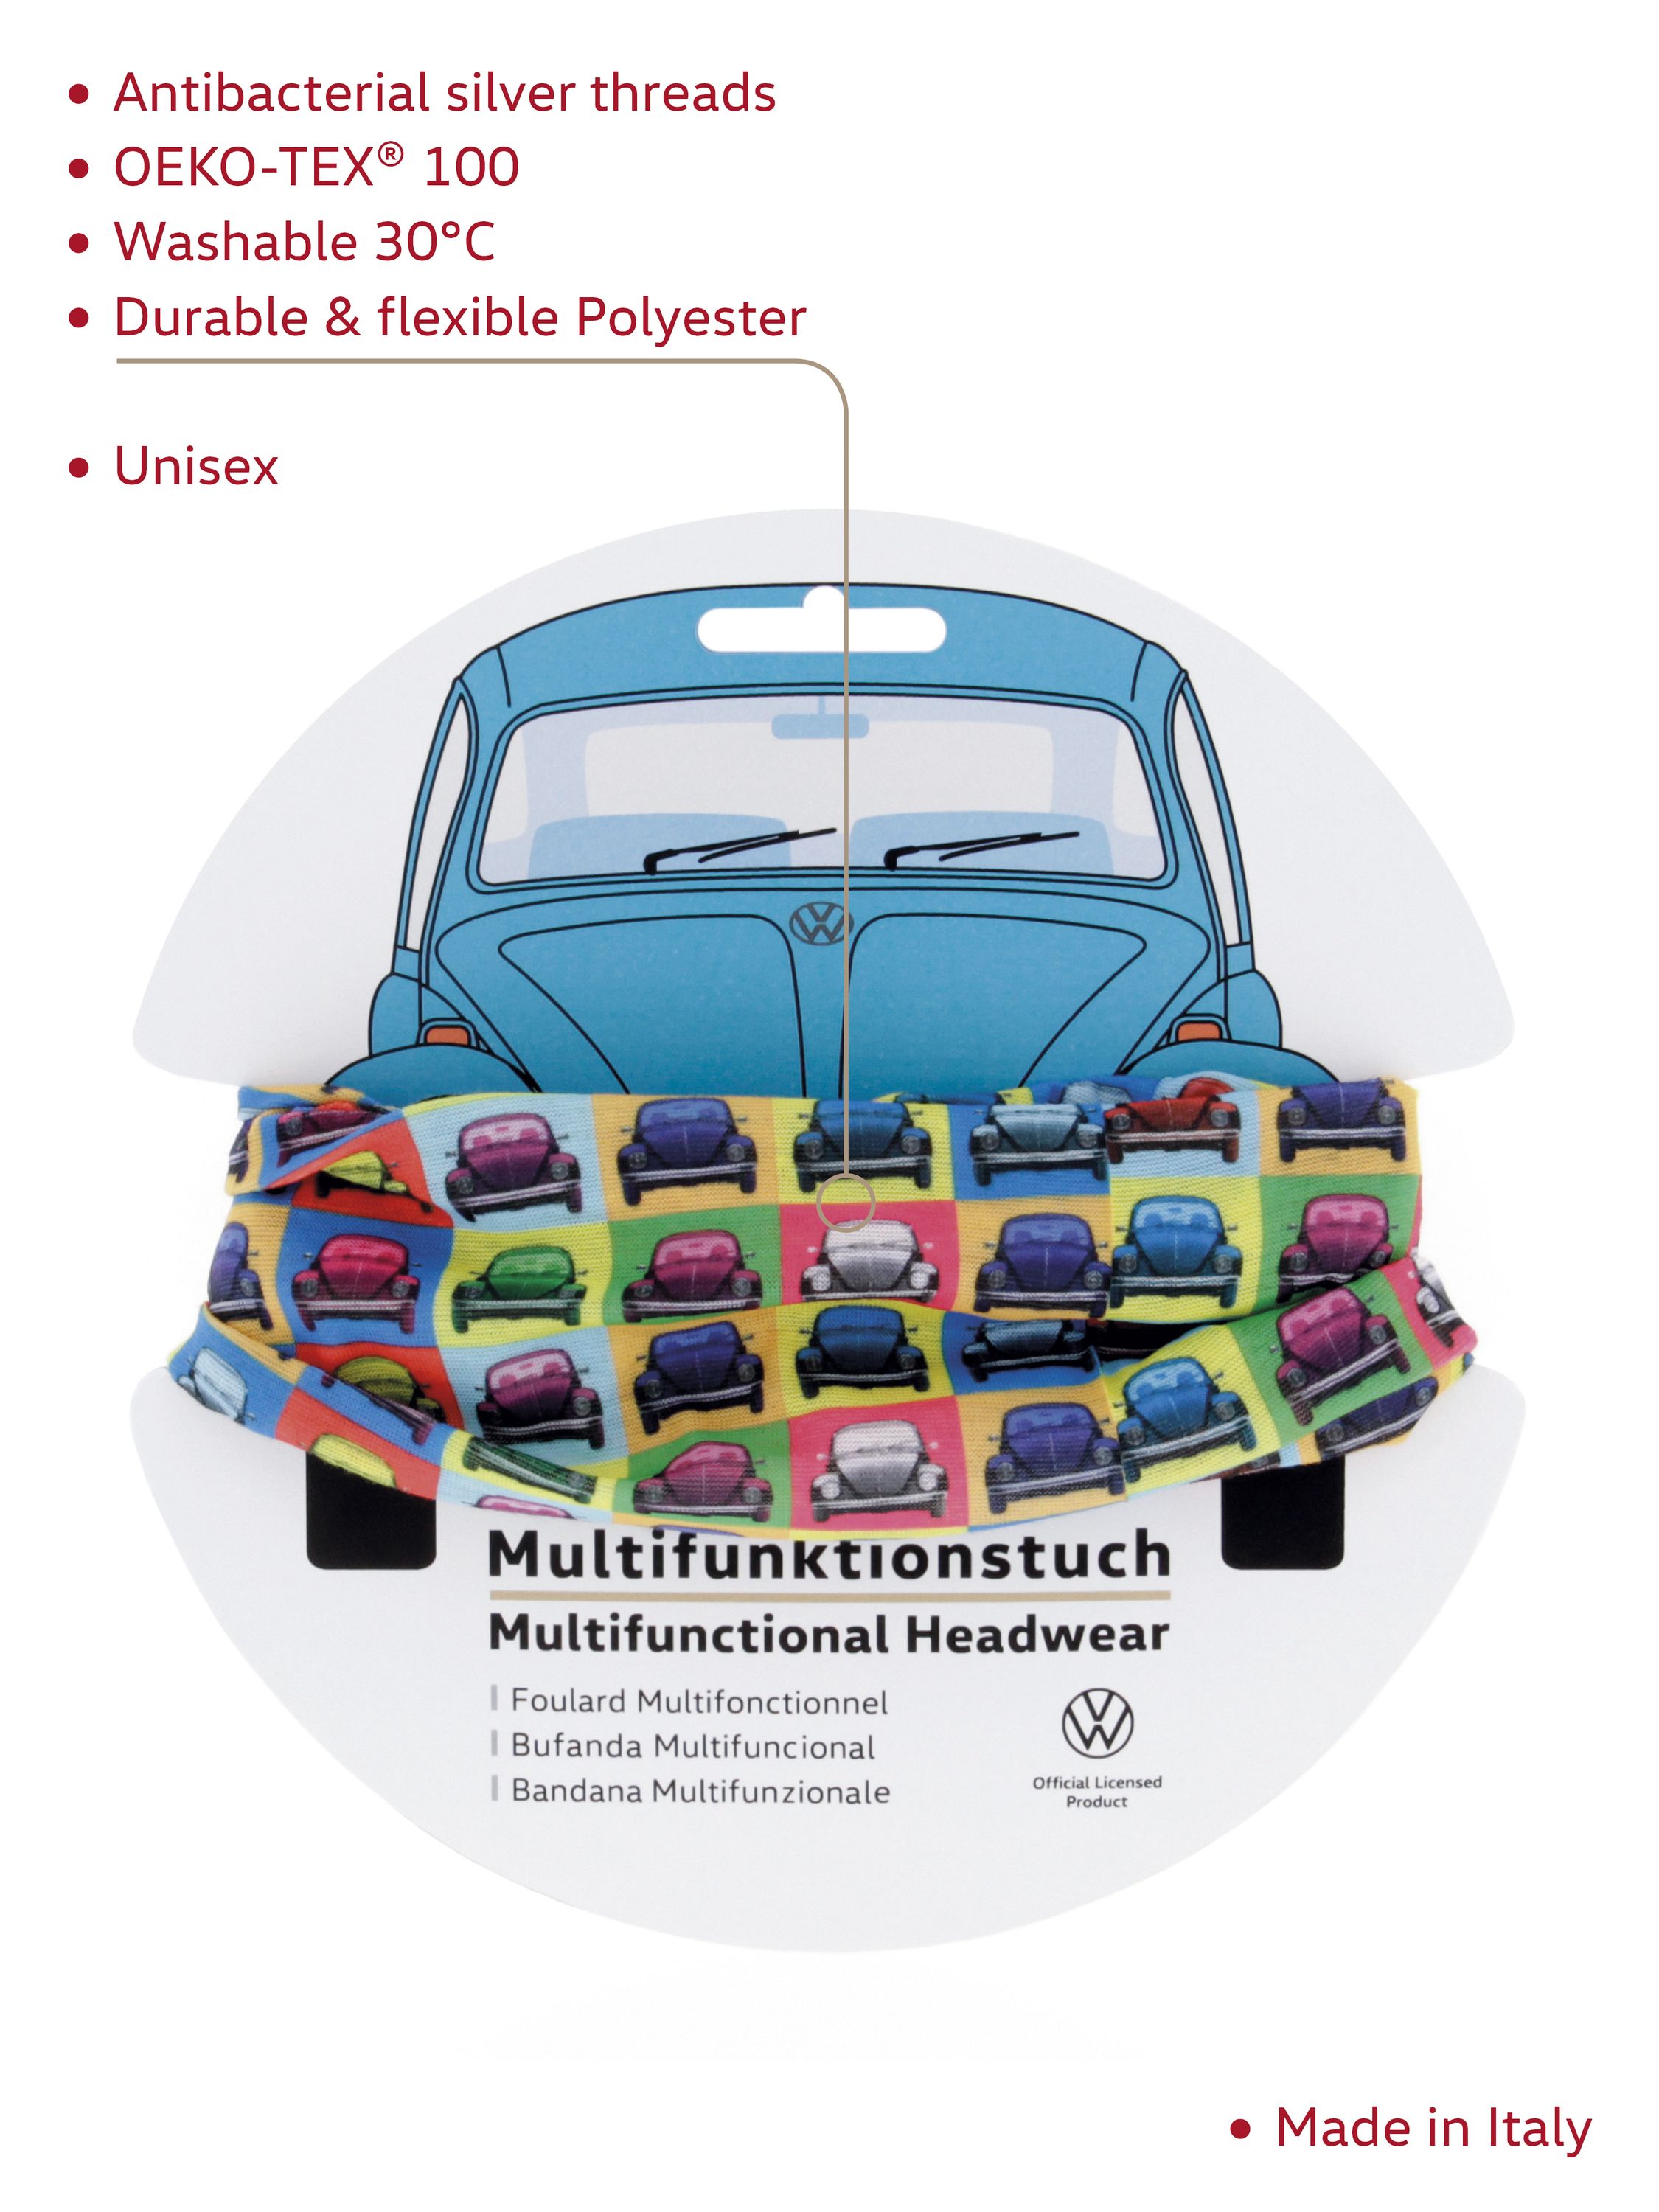 VOLKSWAGEN VW Coccinelle Foulard Tubulaire - Multicolore